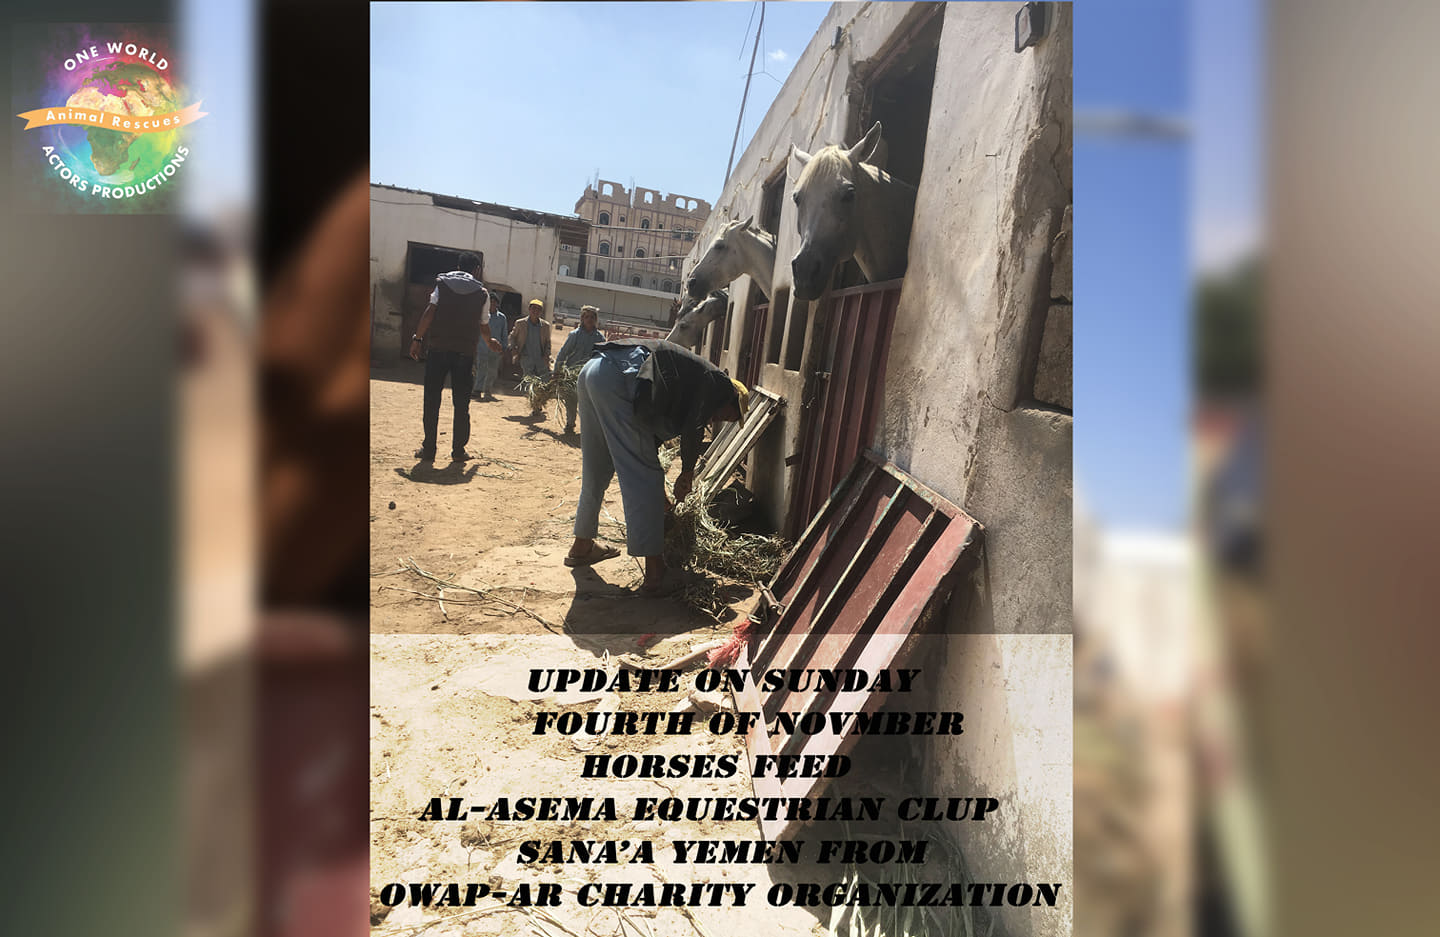 ridin distribution of OWAP AR fodder green persim delivered today by Nadad 4 Nov 2018 sana'a yemen rescue.jpg